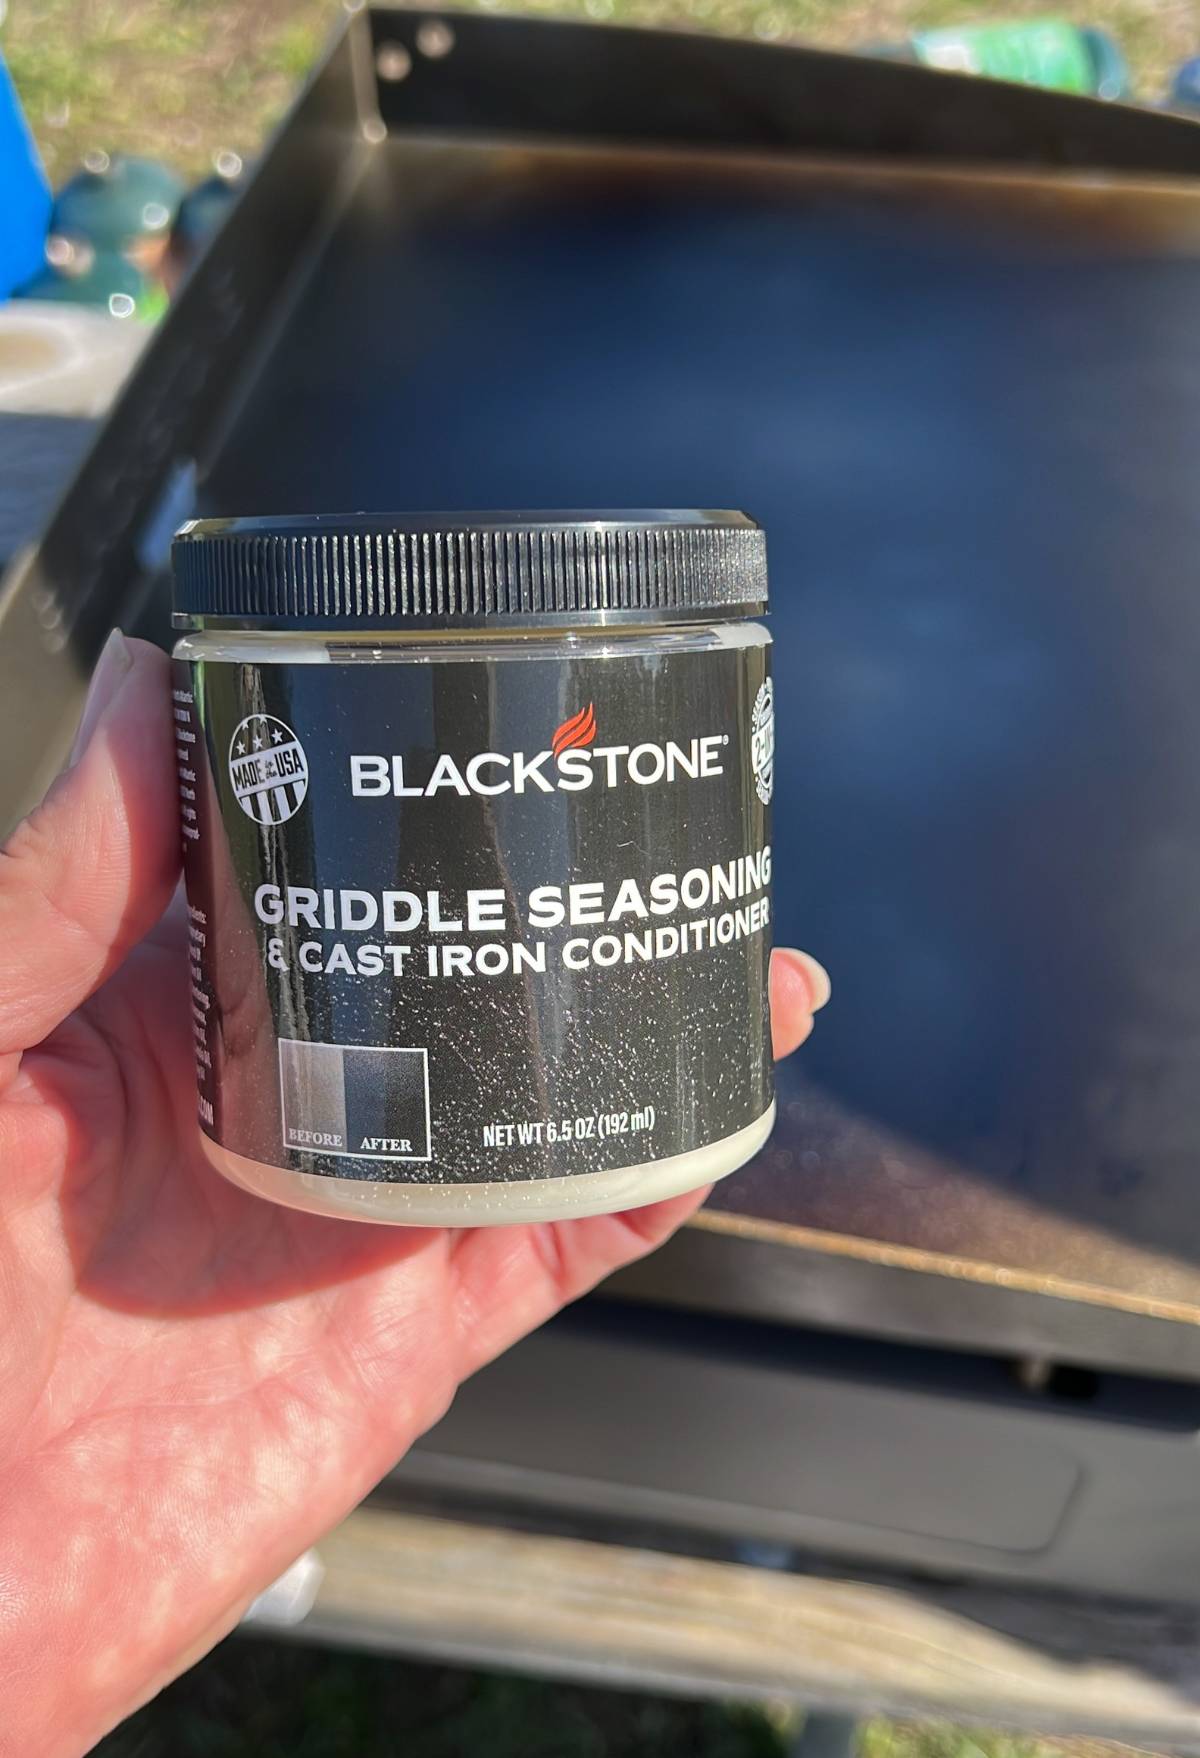 https://bestblackstonerecipes.com/wp-content/uploads/2023/01/How-To-Season-a-Blackstone-Griddle-7.jpg